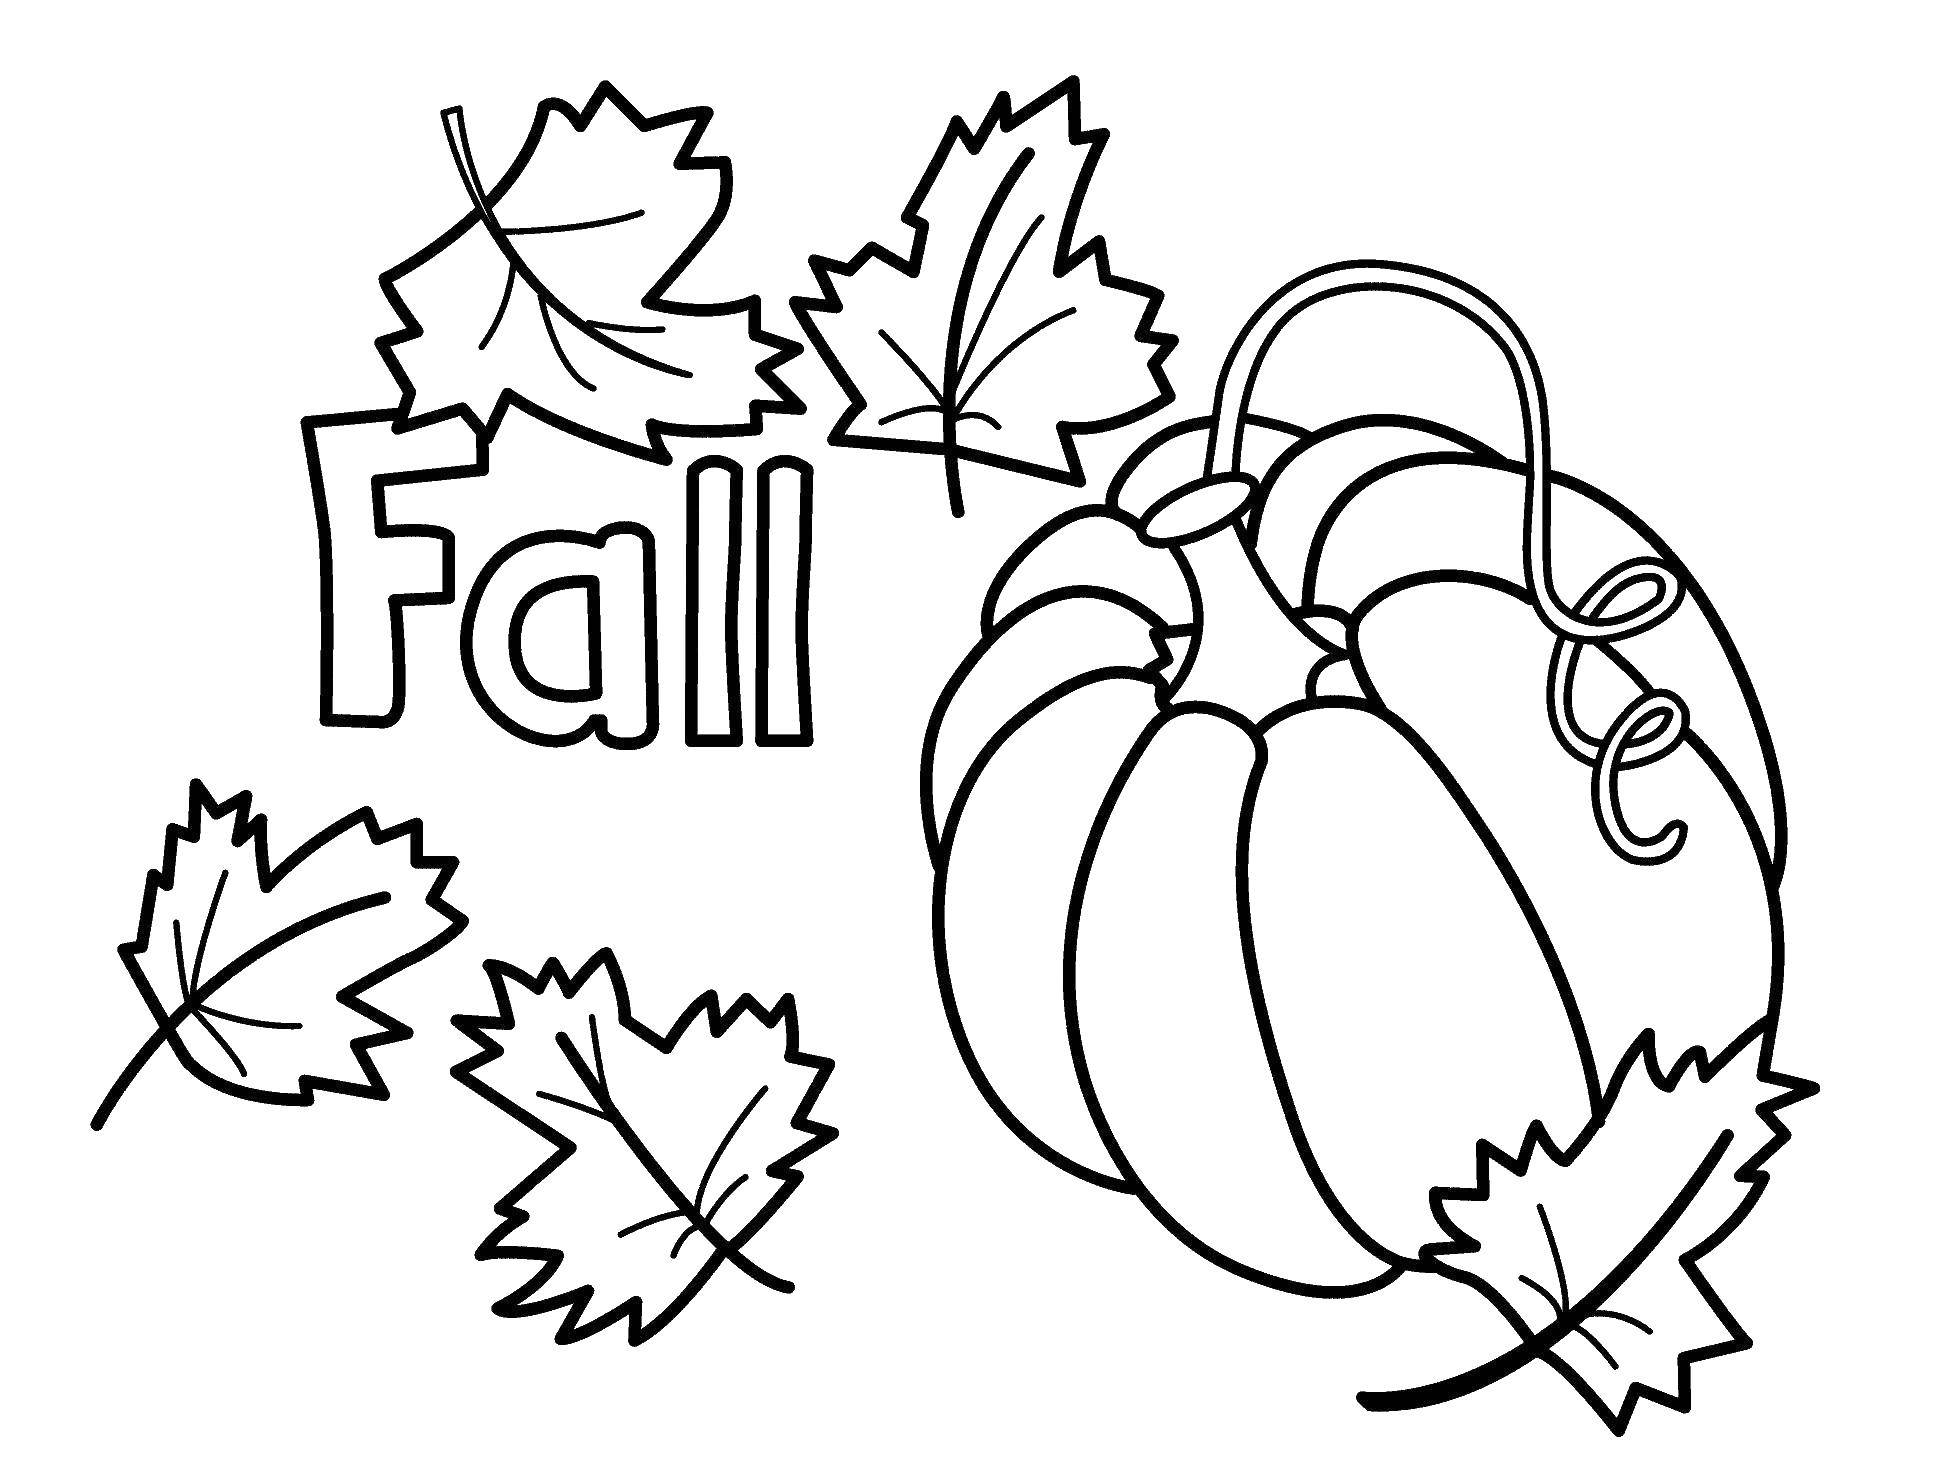 Coloring Autumn harvest. Category Autumn leaves falling. Tags:  autumn harvest, pumpkins.